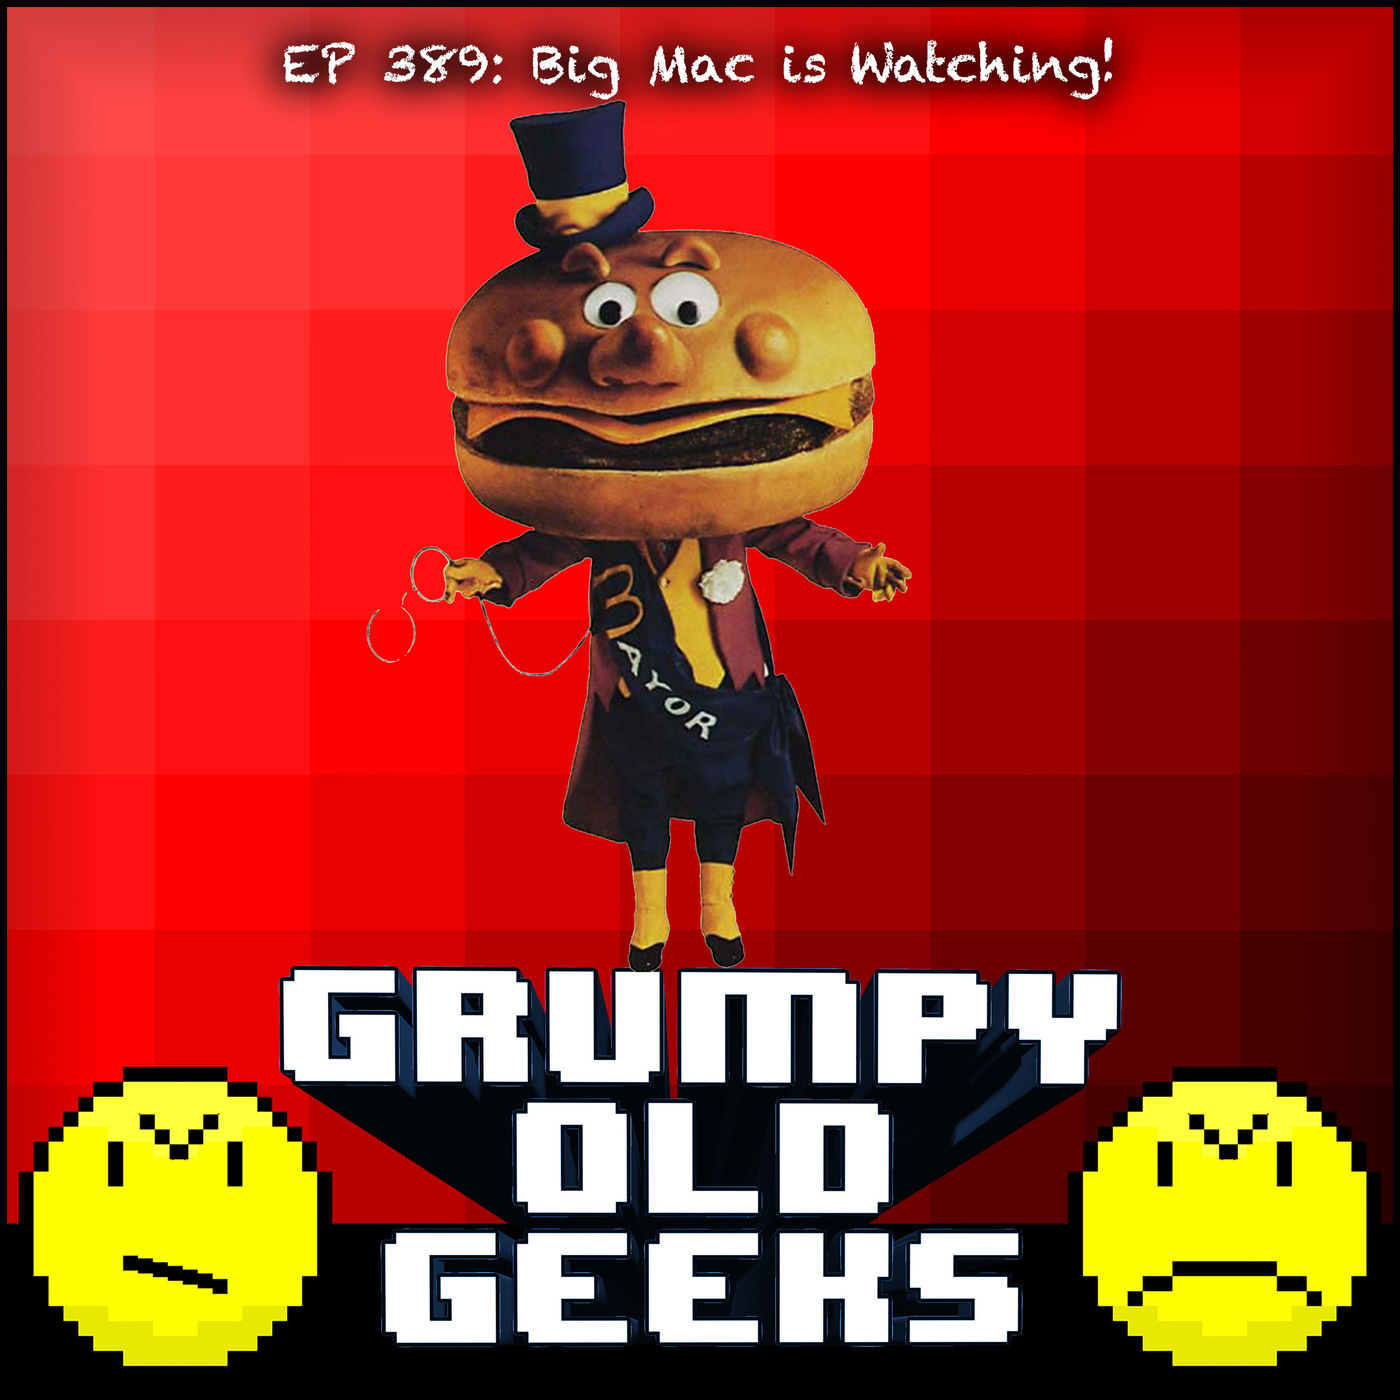 389: Big Mac is Watching!